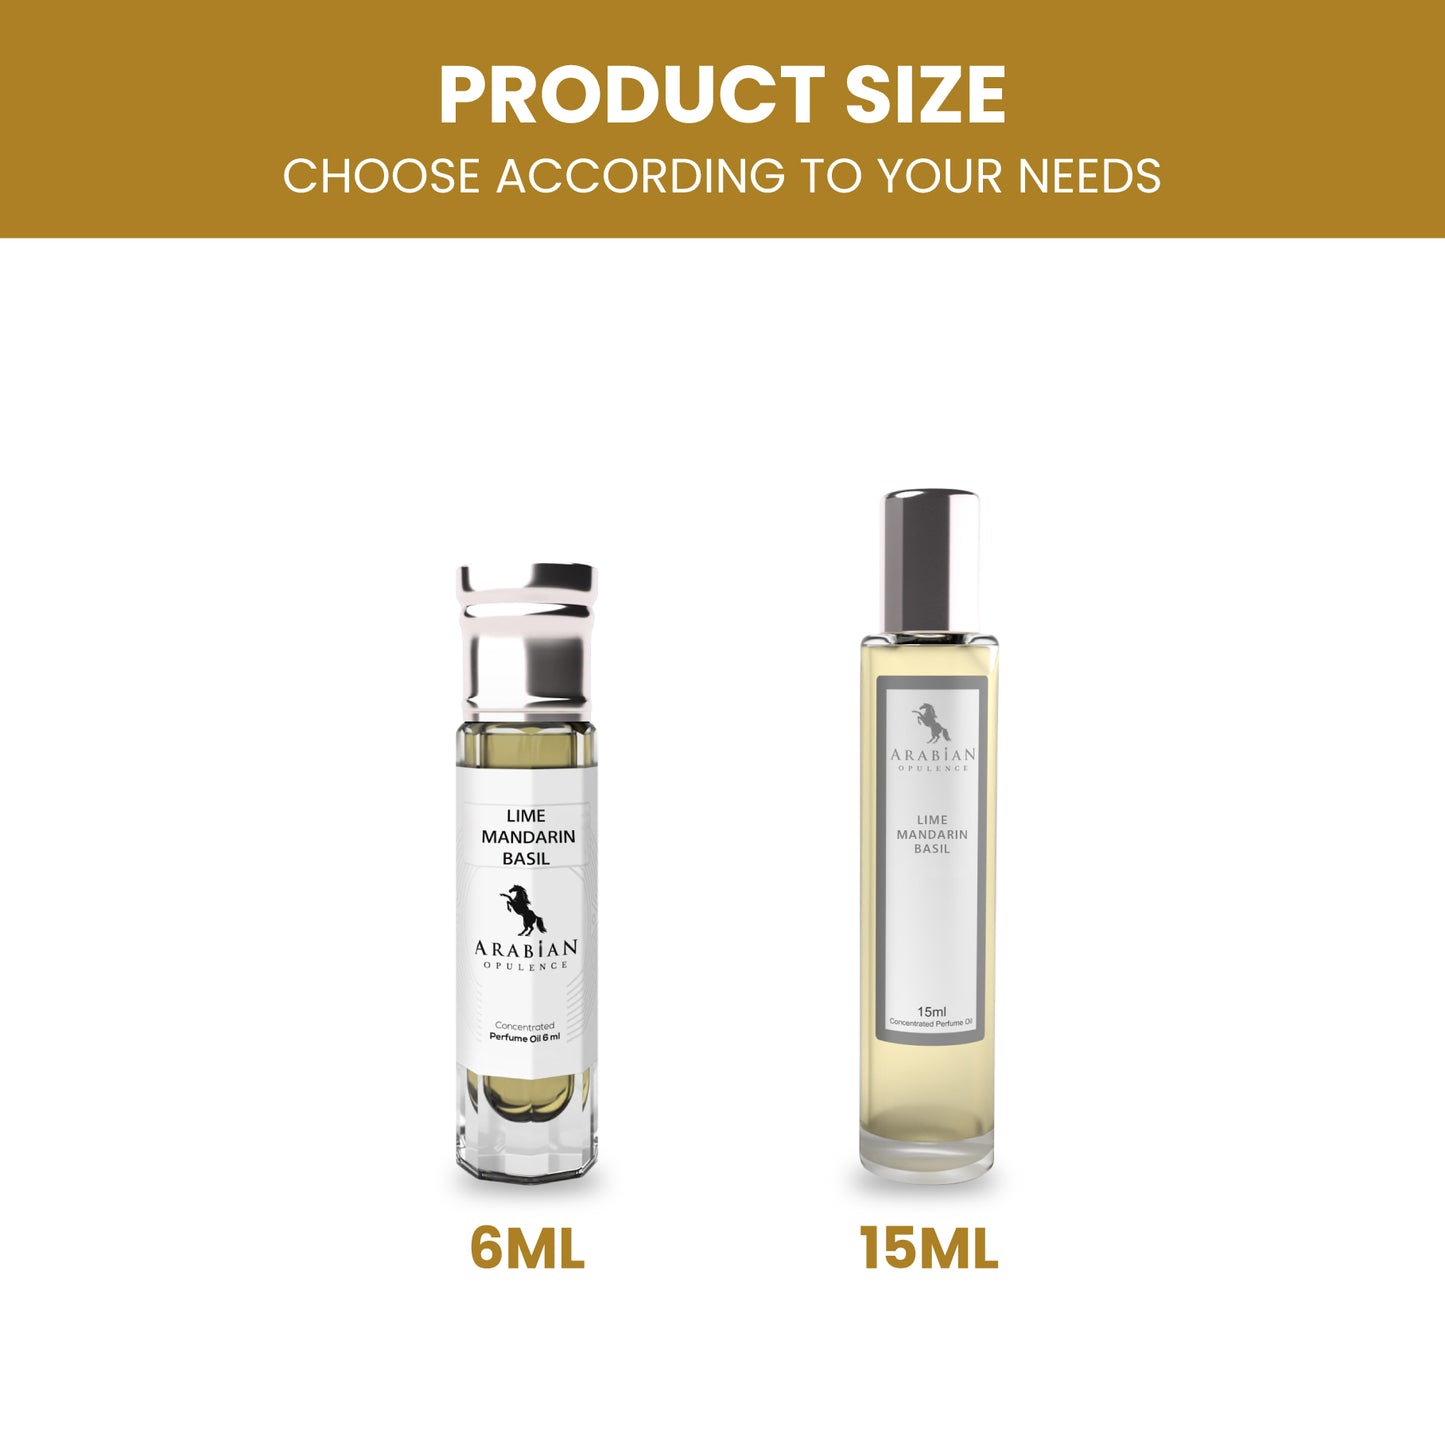 FR187 LIME, MANDARIN AND BASIL - Perfume Body Oil - Alcohol Free